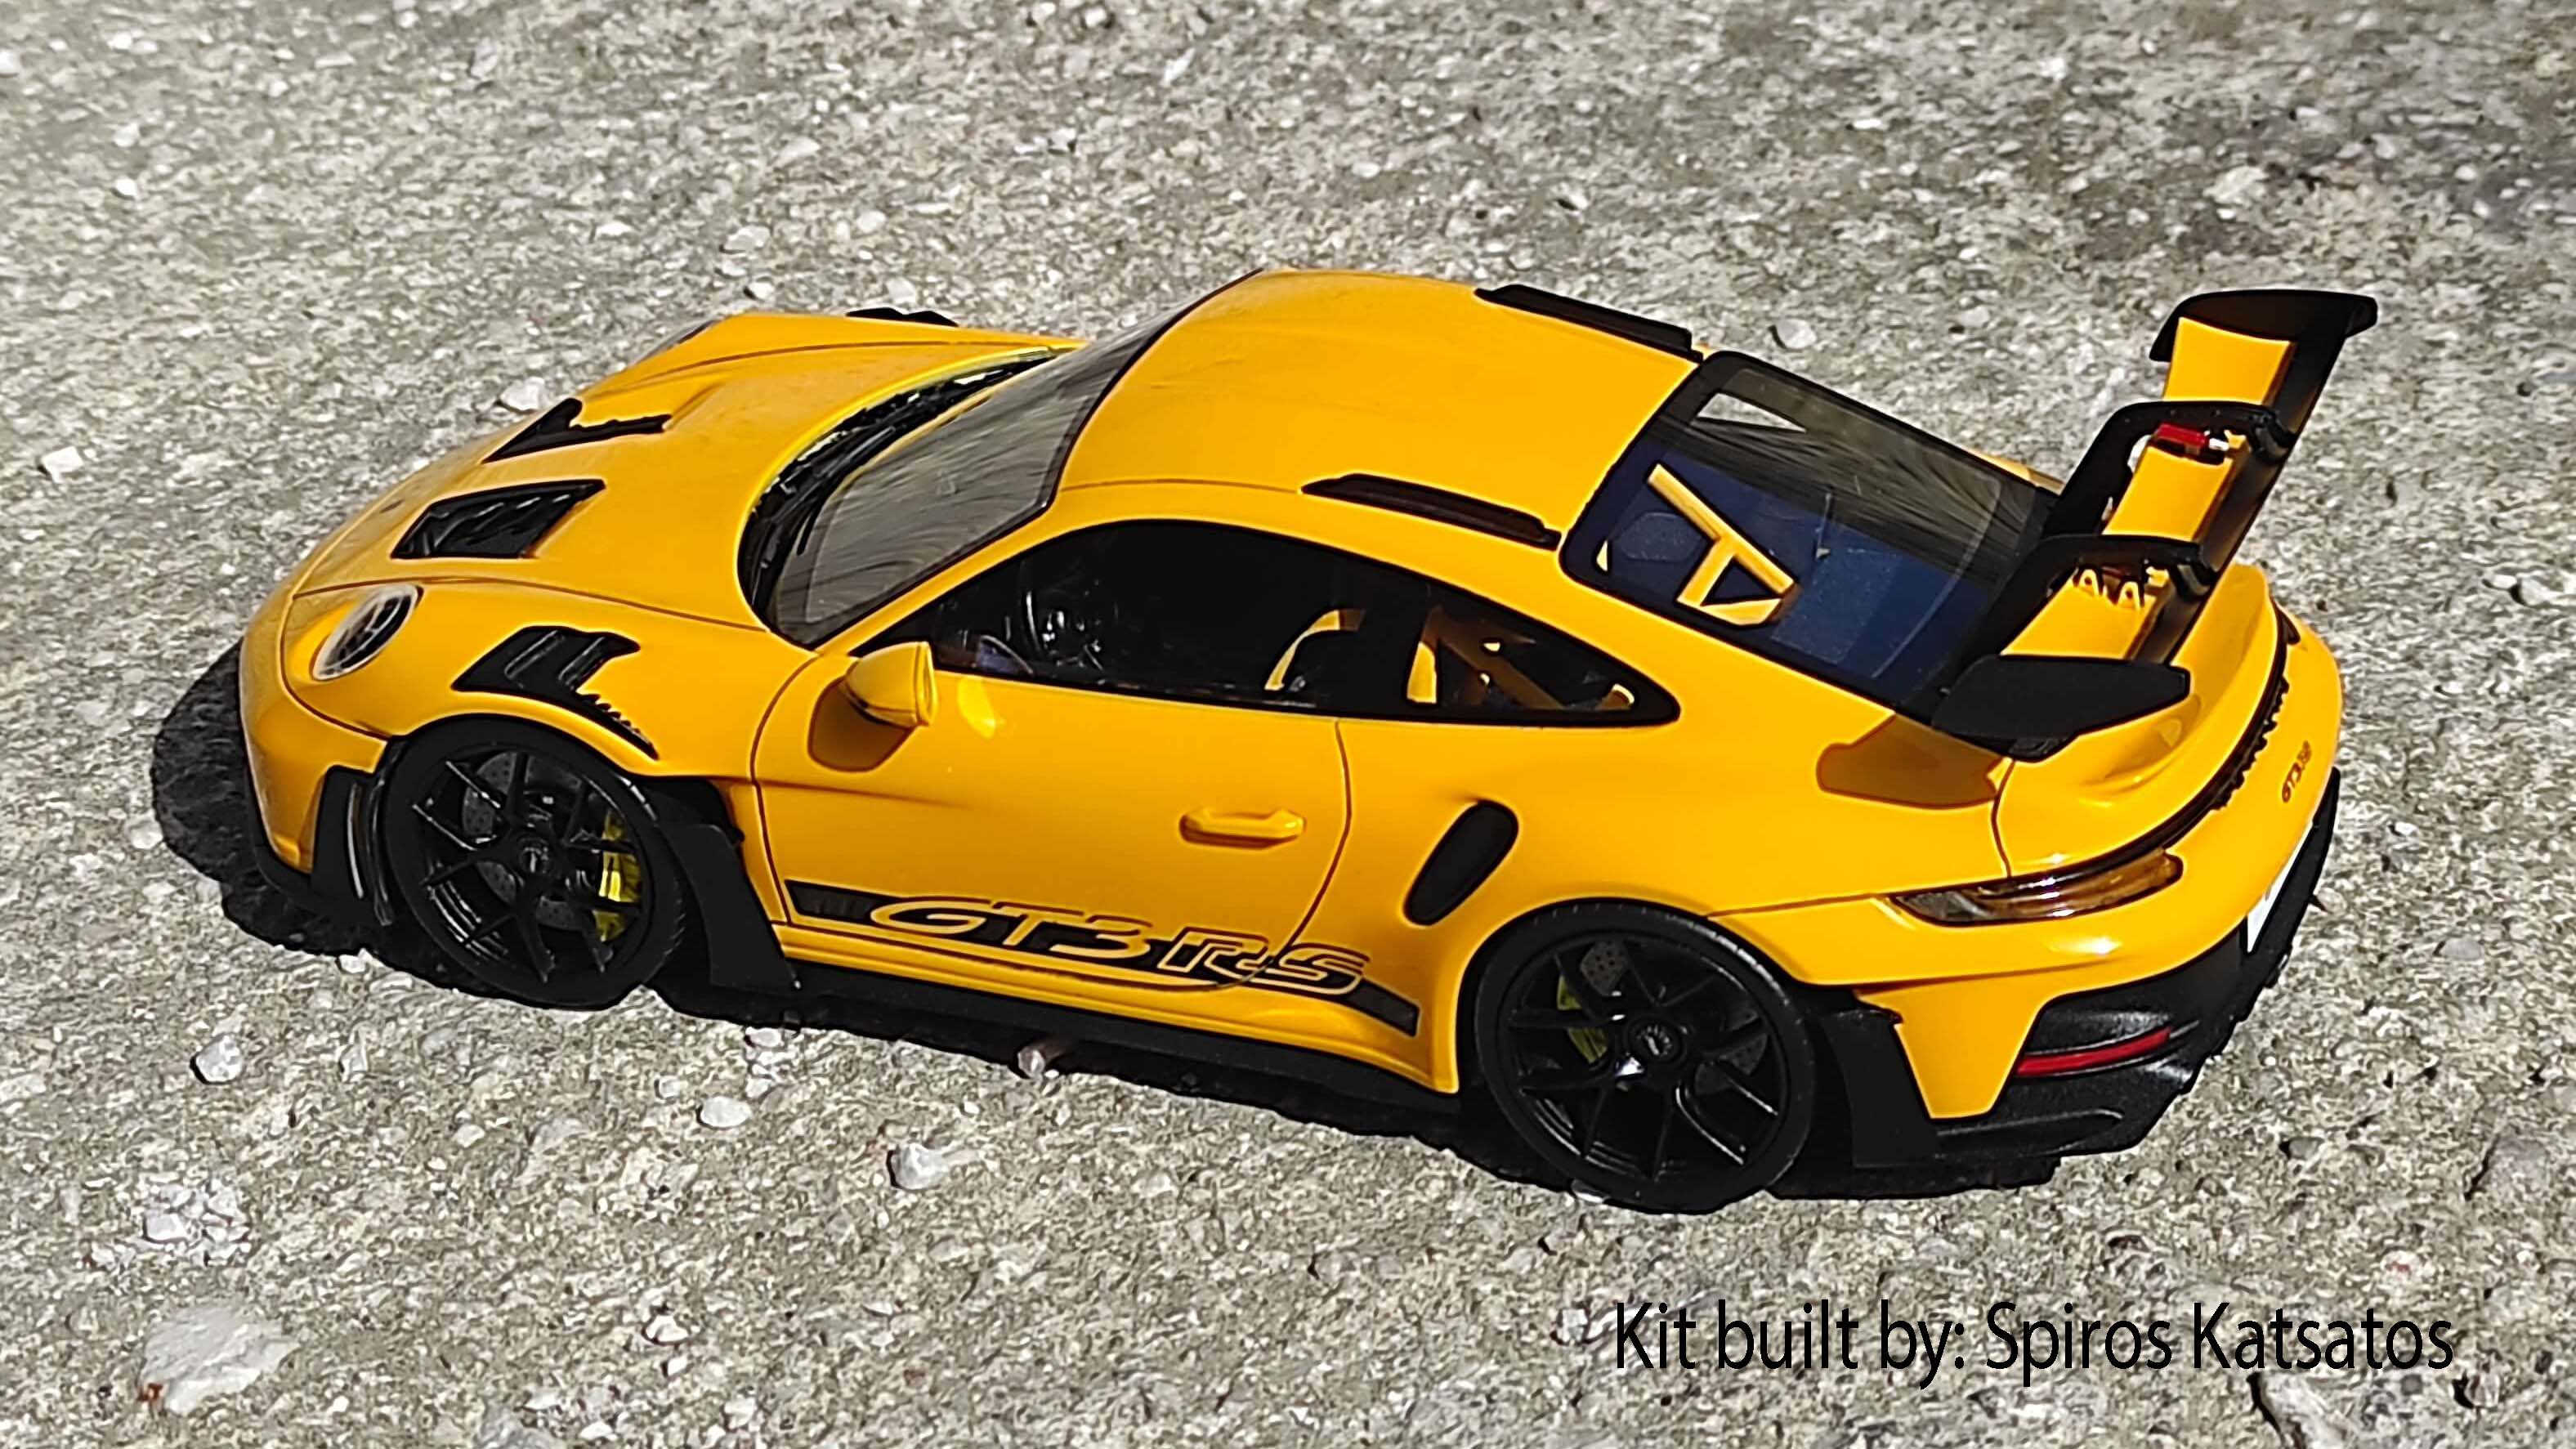 R/C 1:24 Porsche GT3 RS